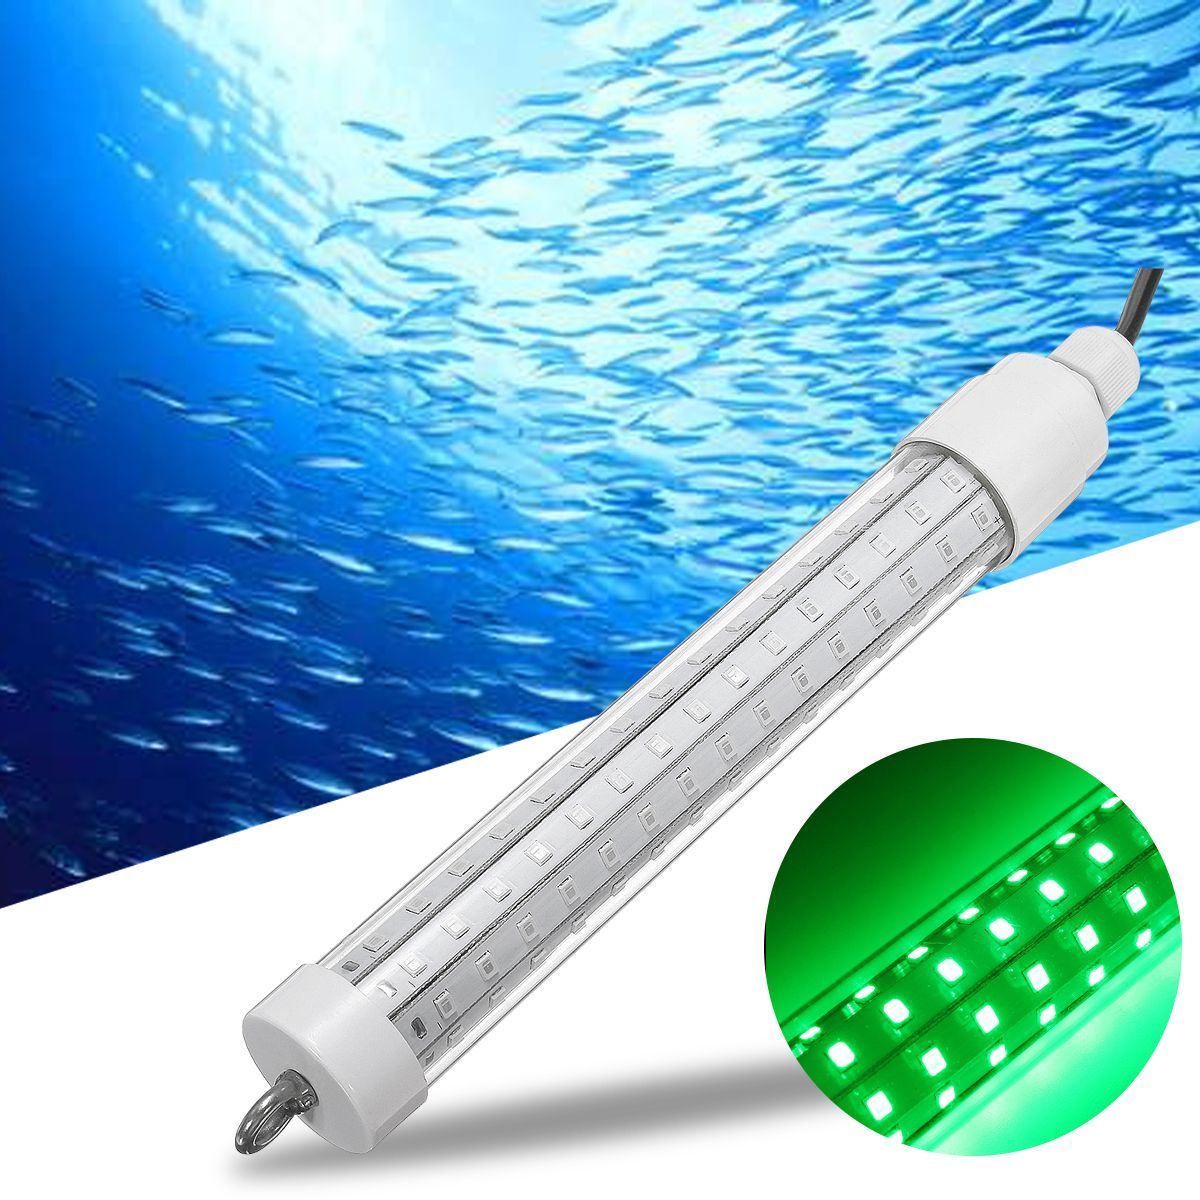 12V-24V-10W-Fishing-Lamp-Underwater-Boat-Submersible-Green-LED-Glow-Lamp-1628850